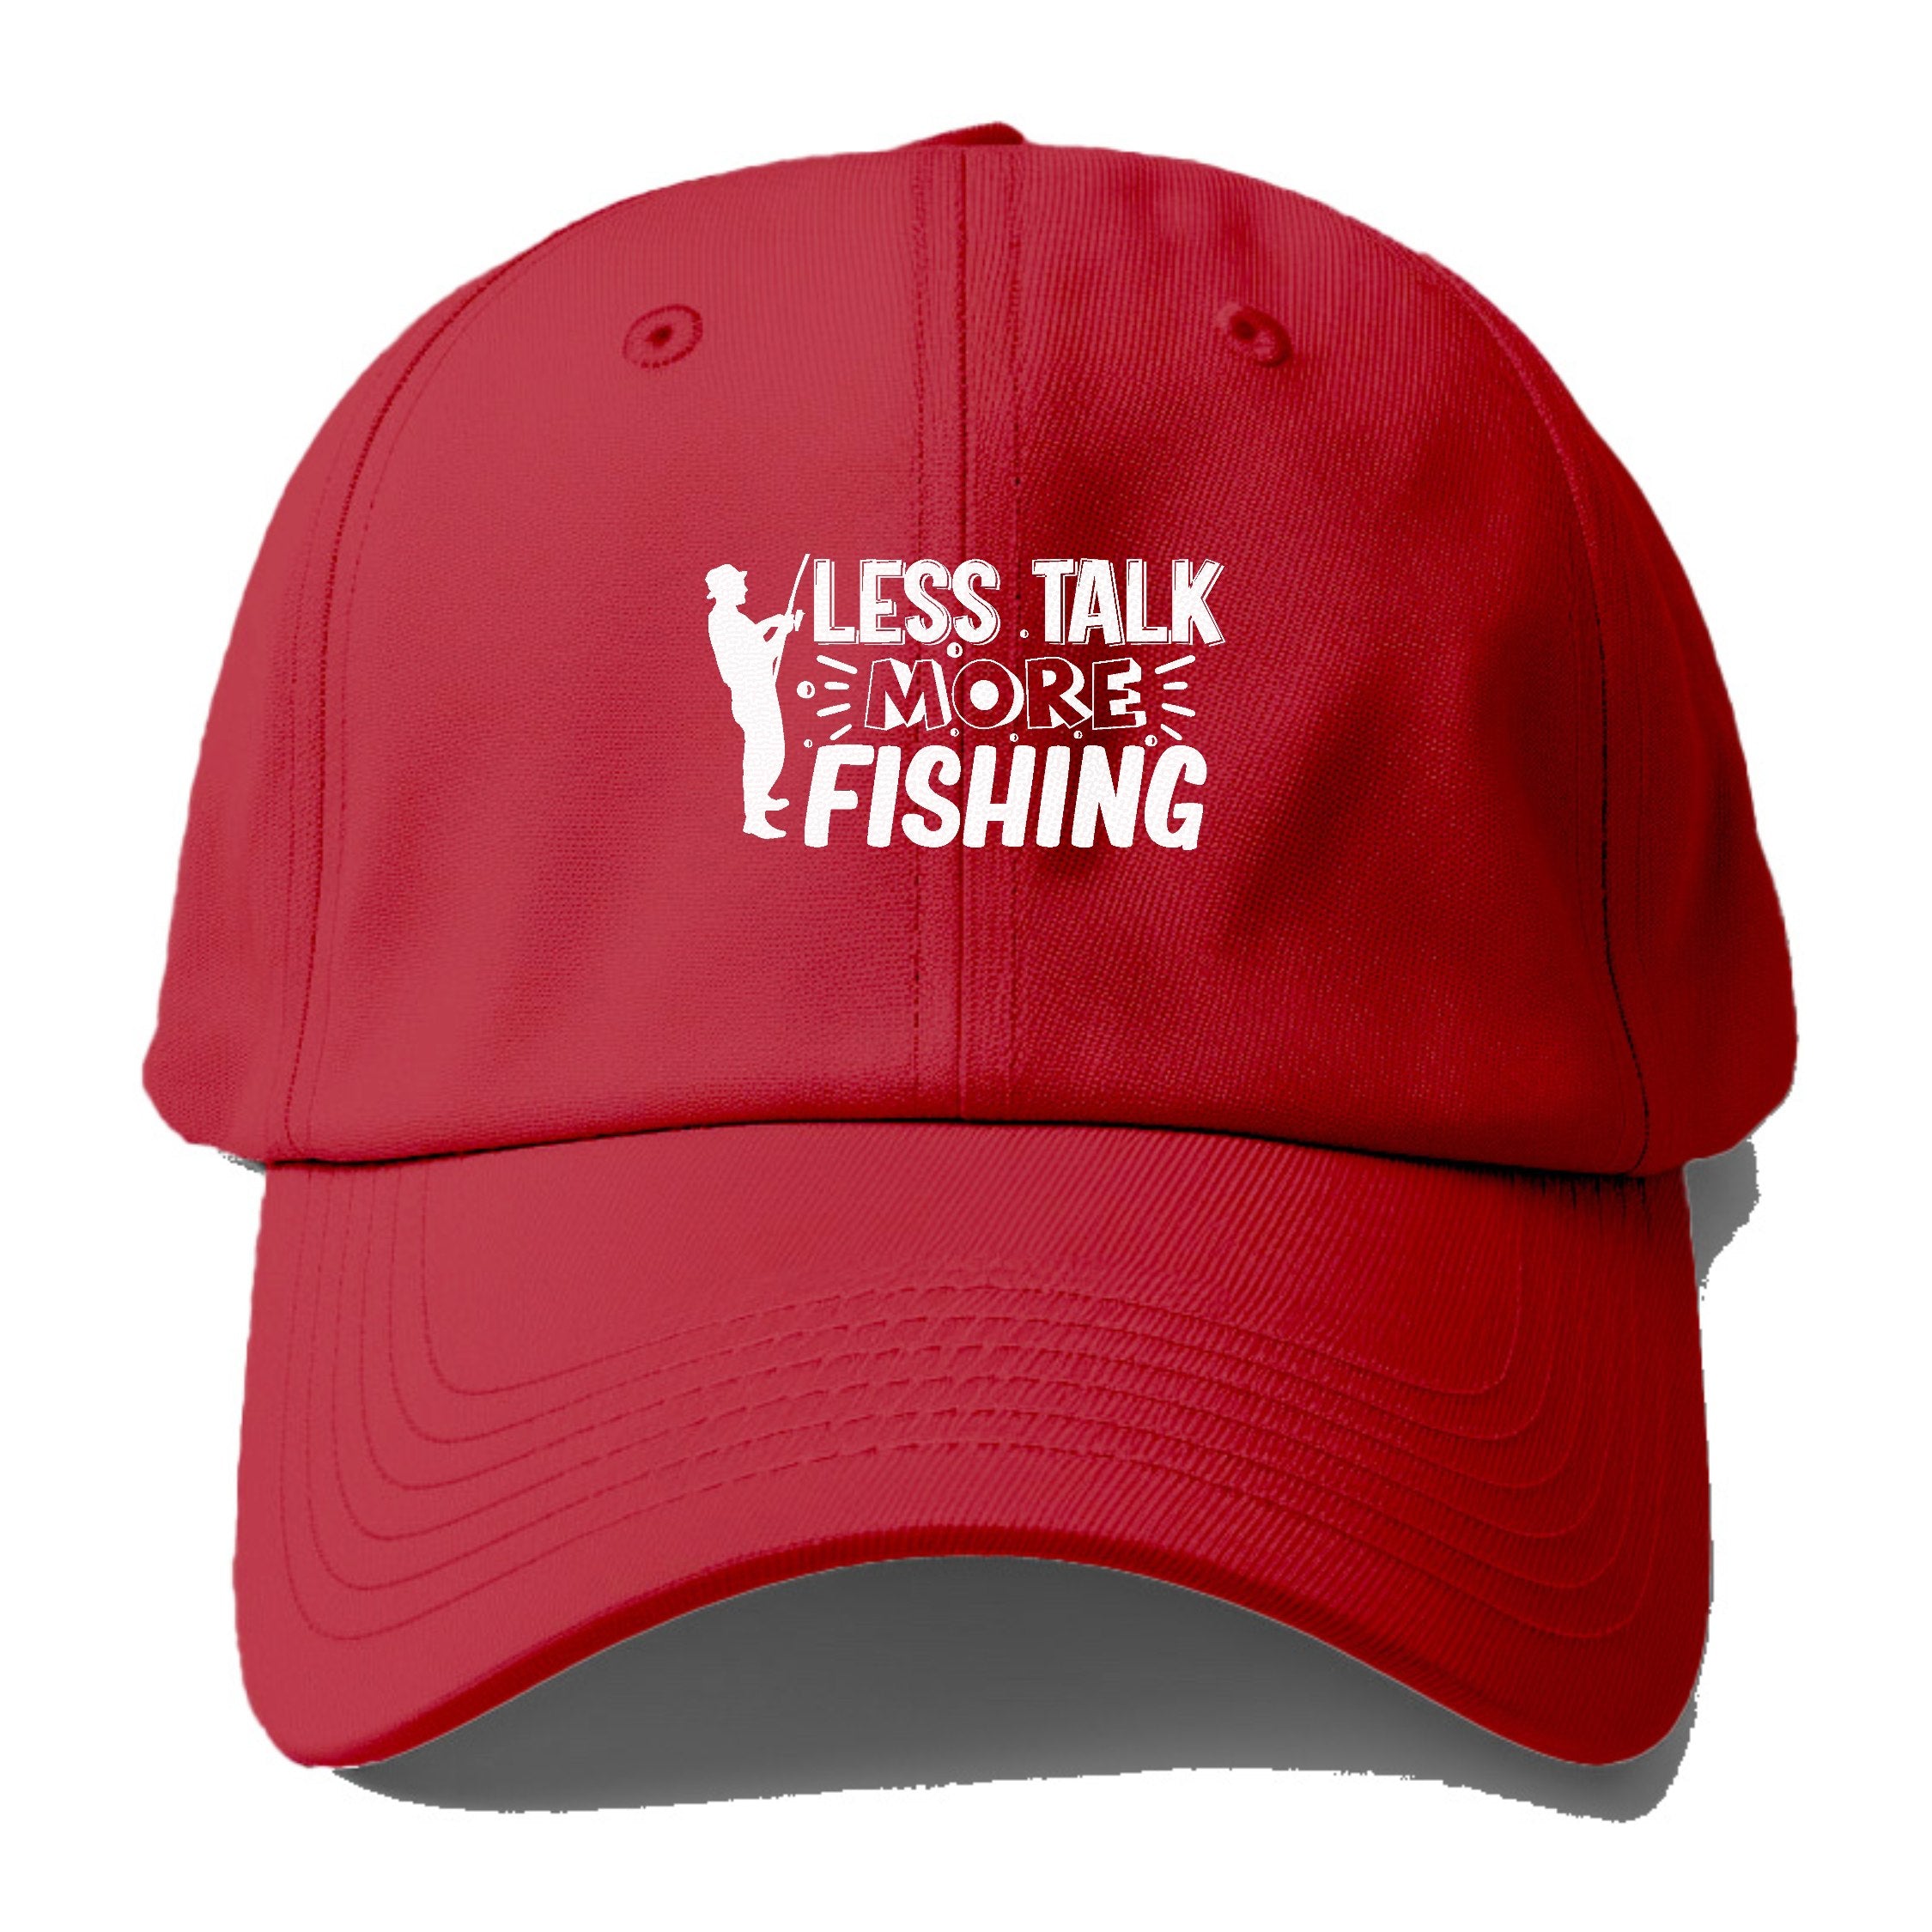 Less Talk More Fishing Baseball Cap Red